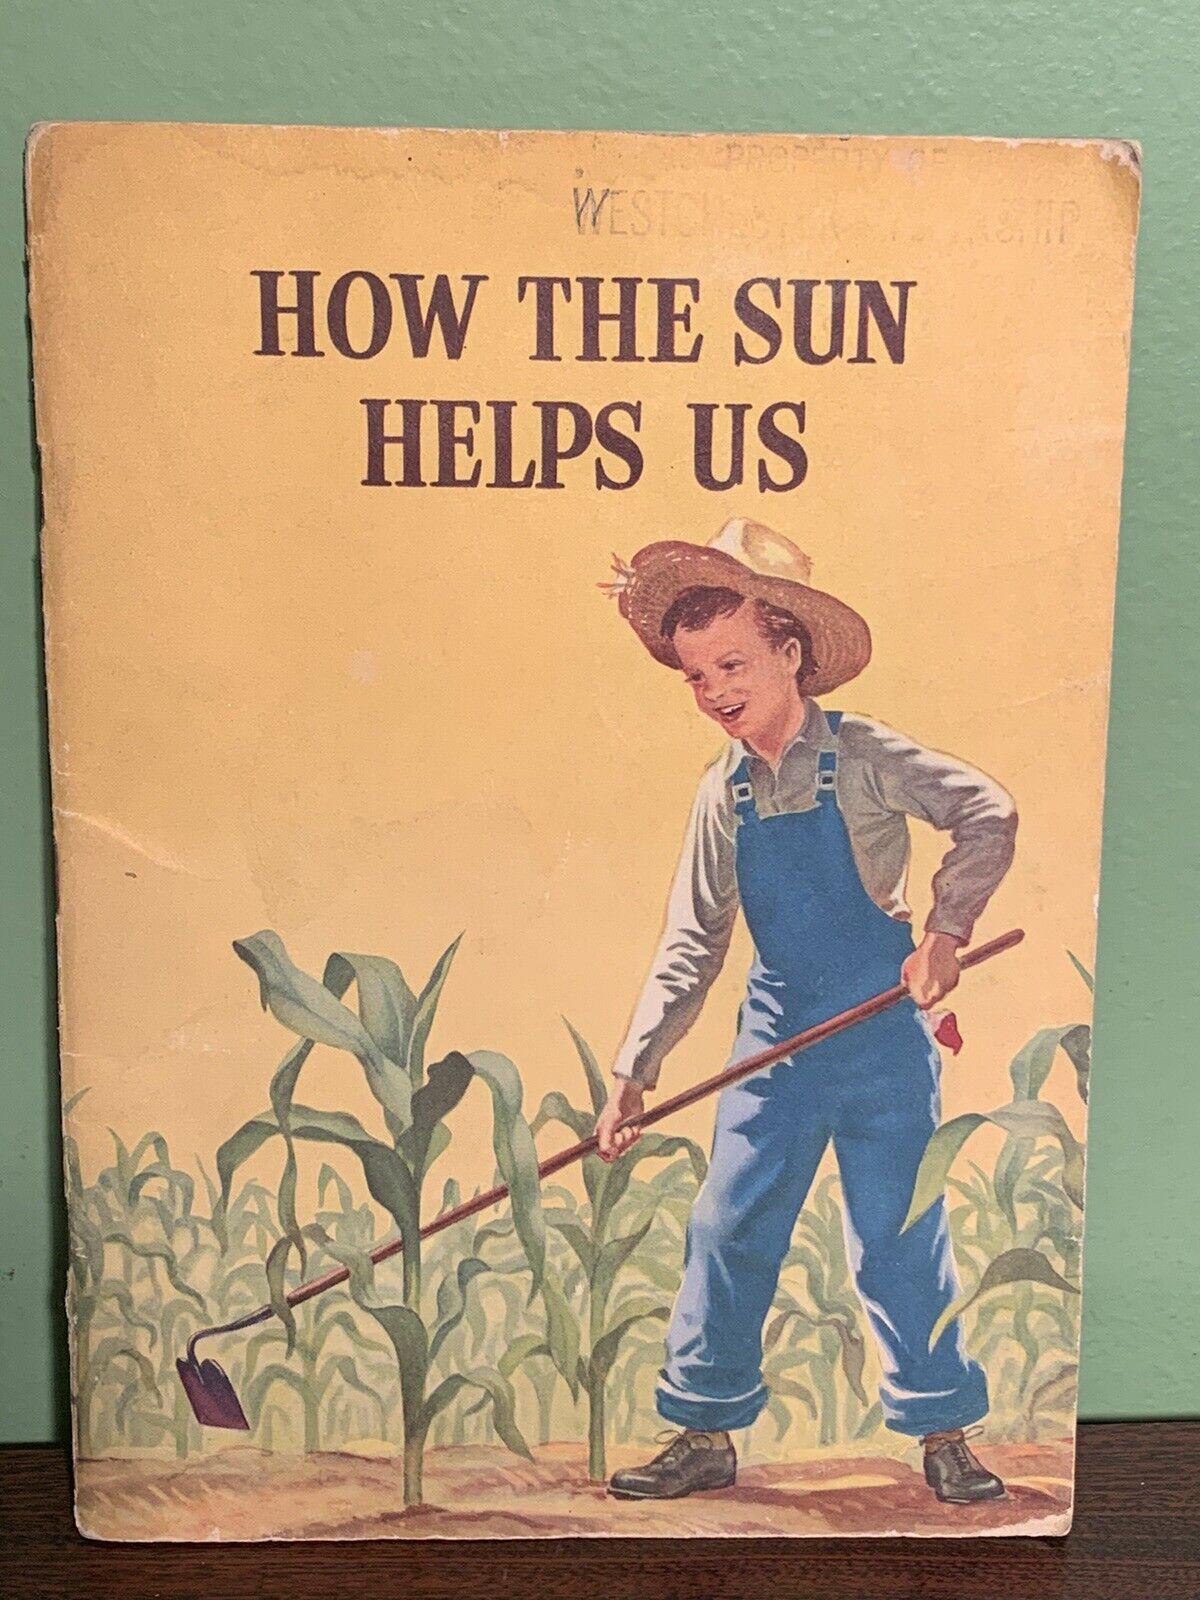 HOW THE SUN HELPS US - Glenn Blough - 1950's VINTAGE SCIENCE EDUCATION SERIES